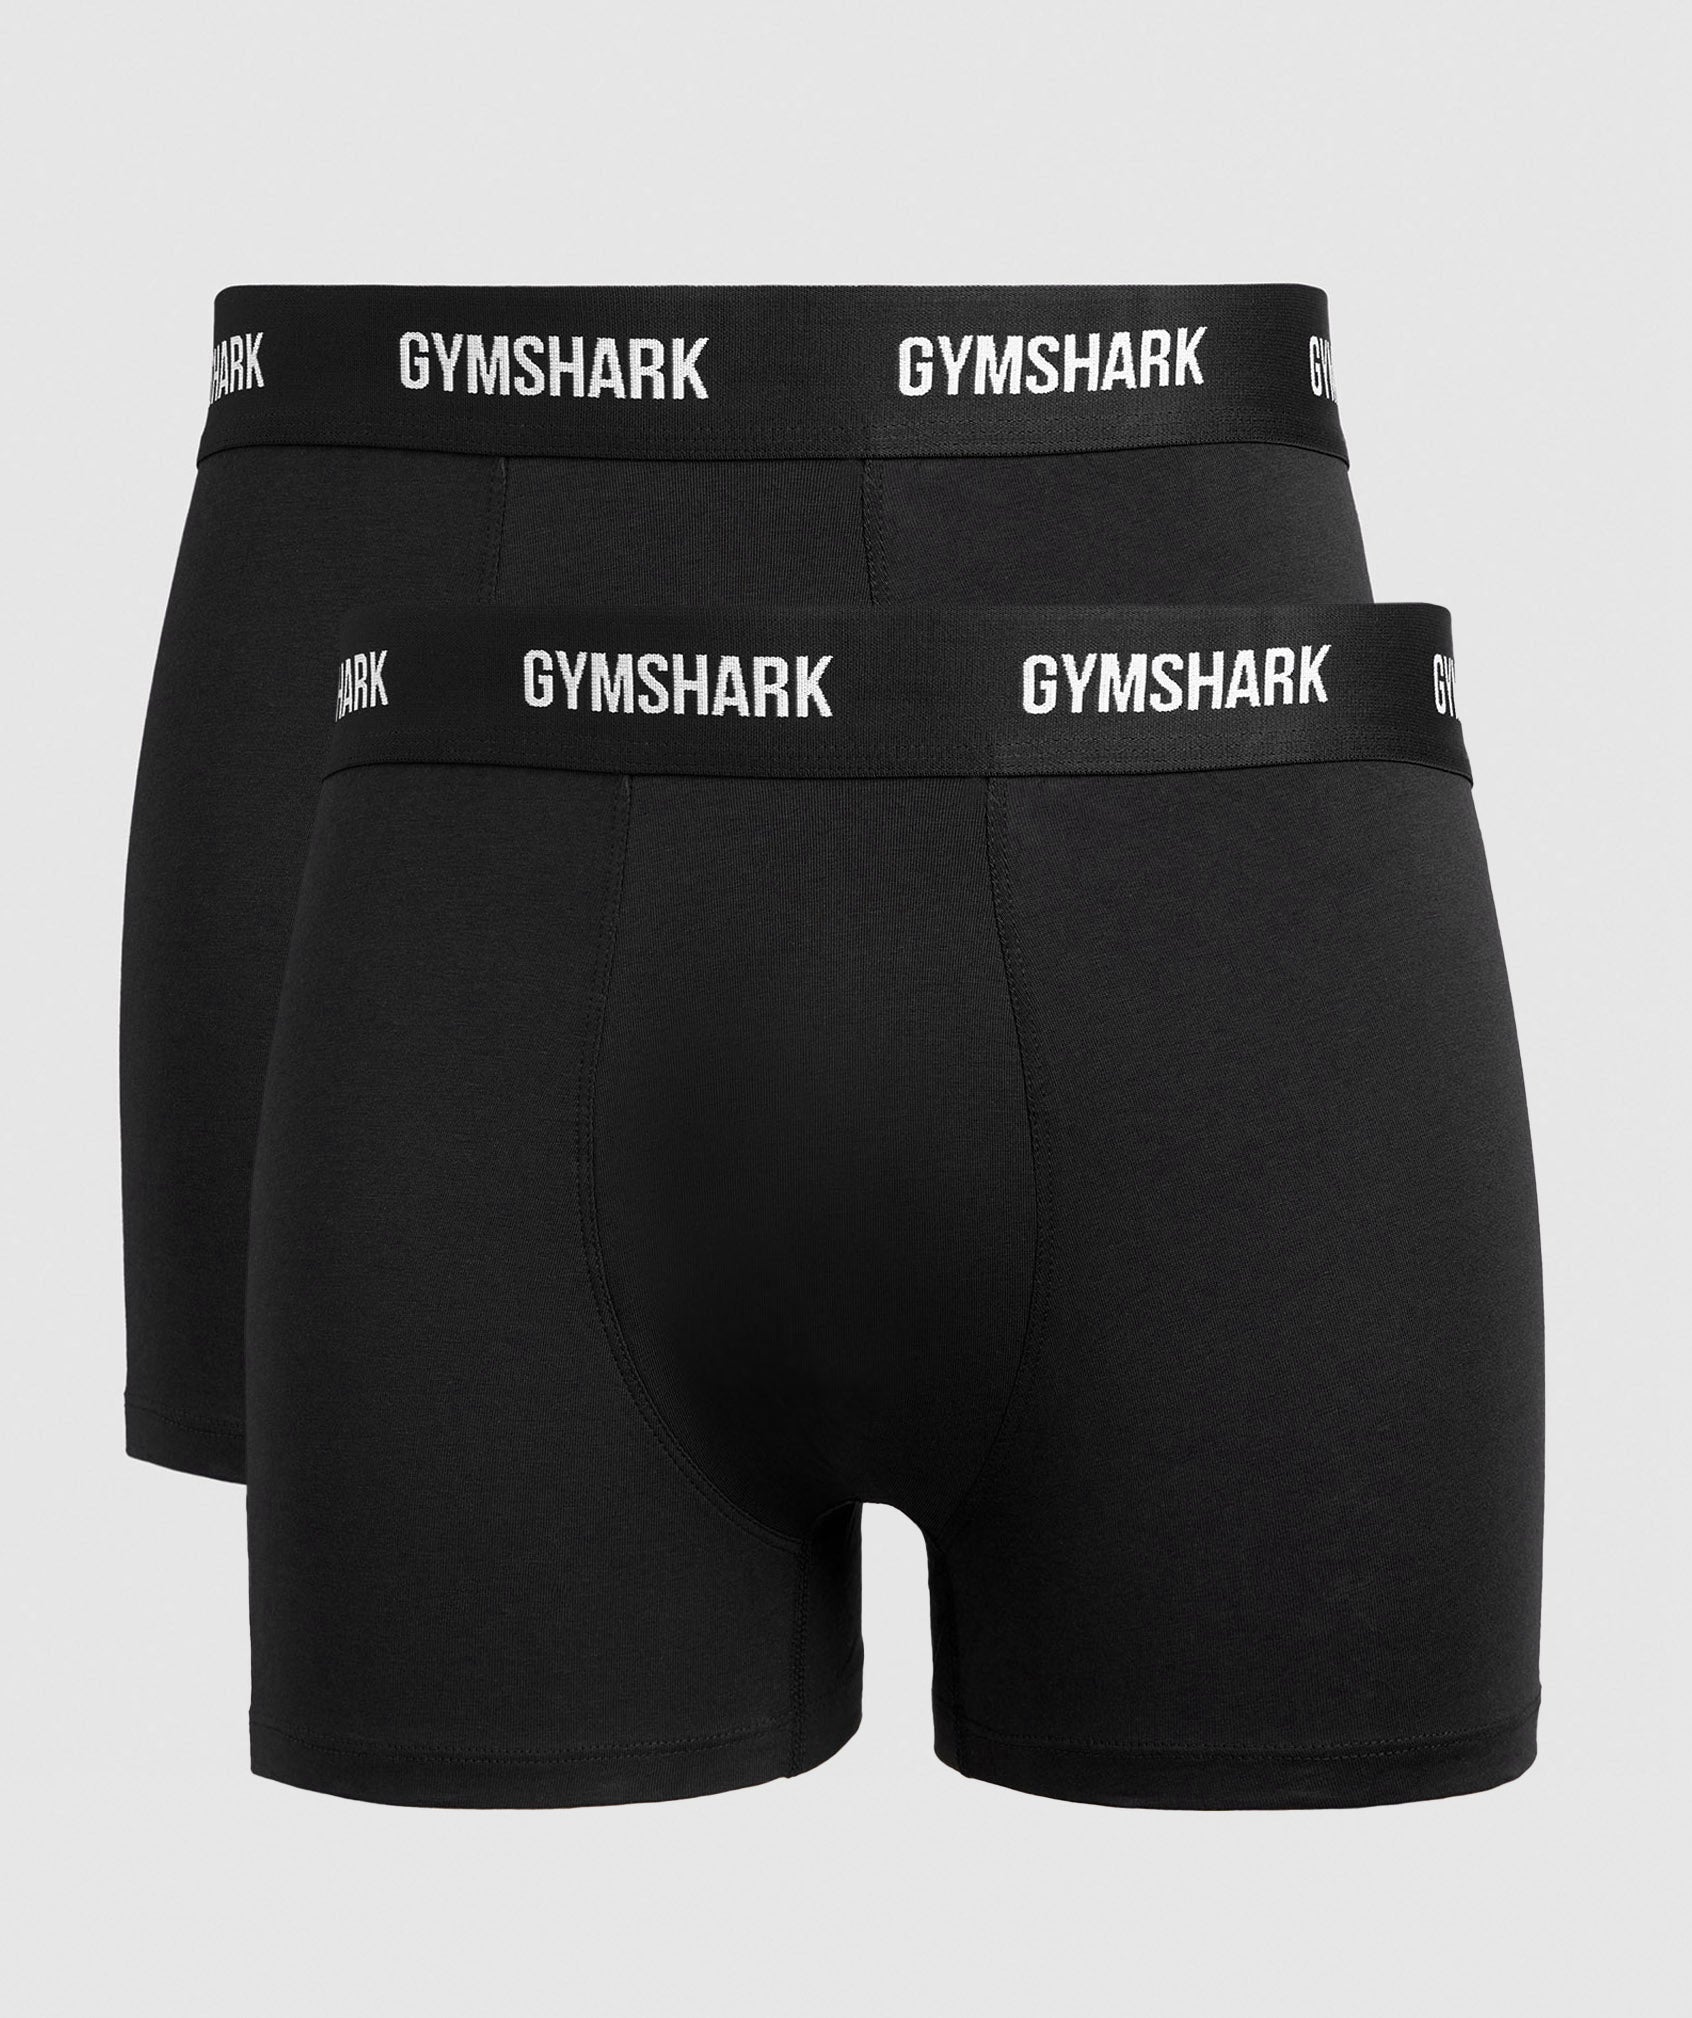 Brand New Men's GymShark Black and Grey Logo Boxer Shorts Size M & L